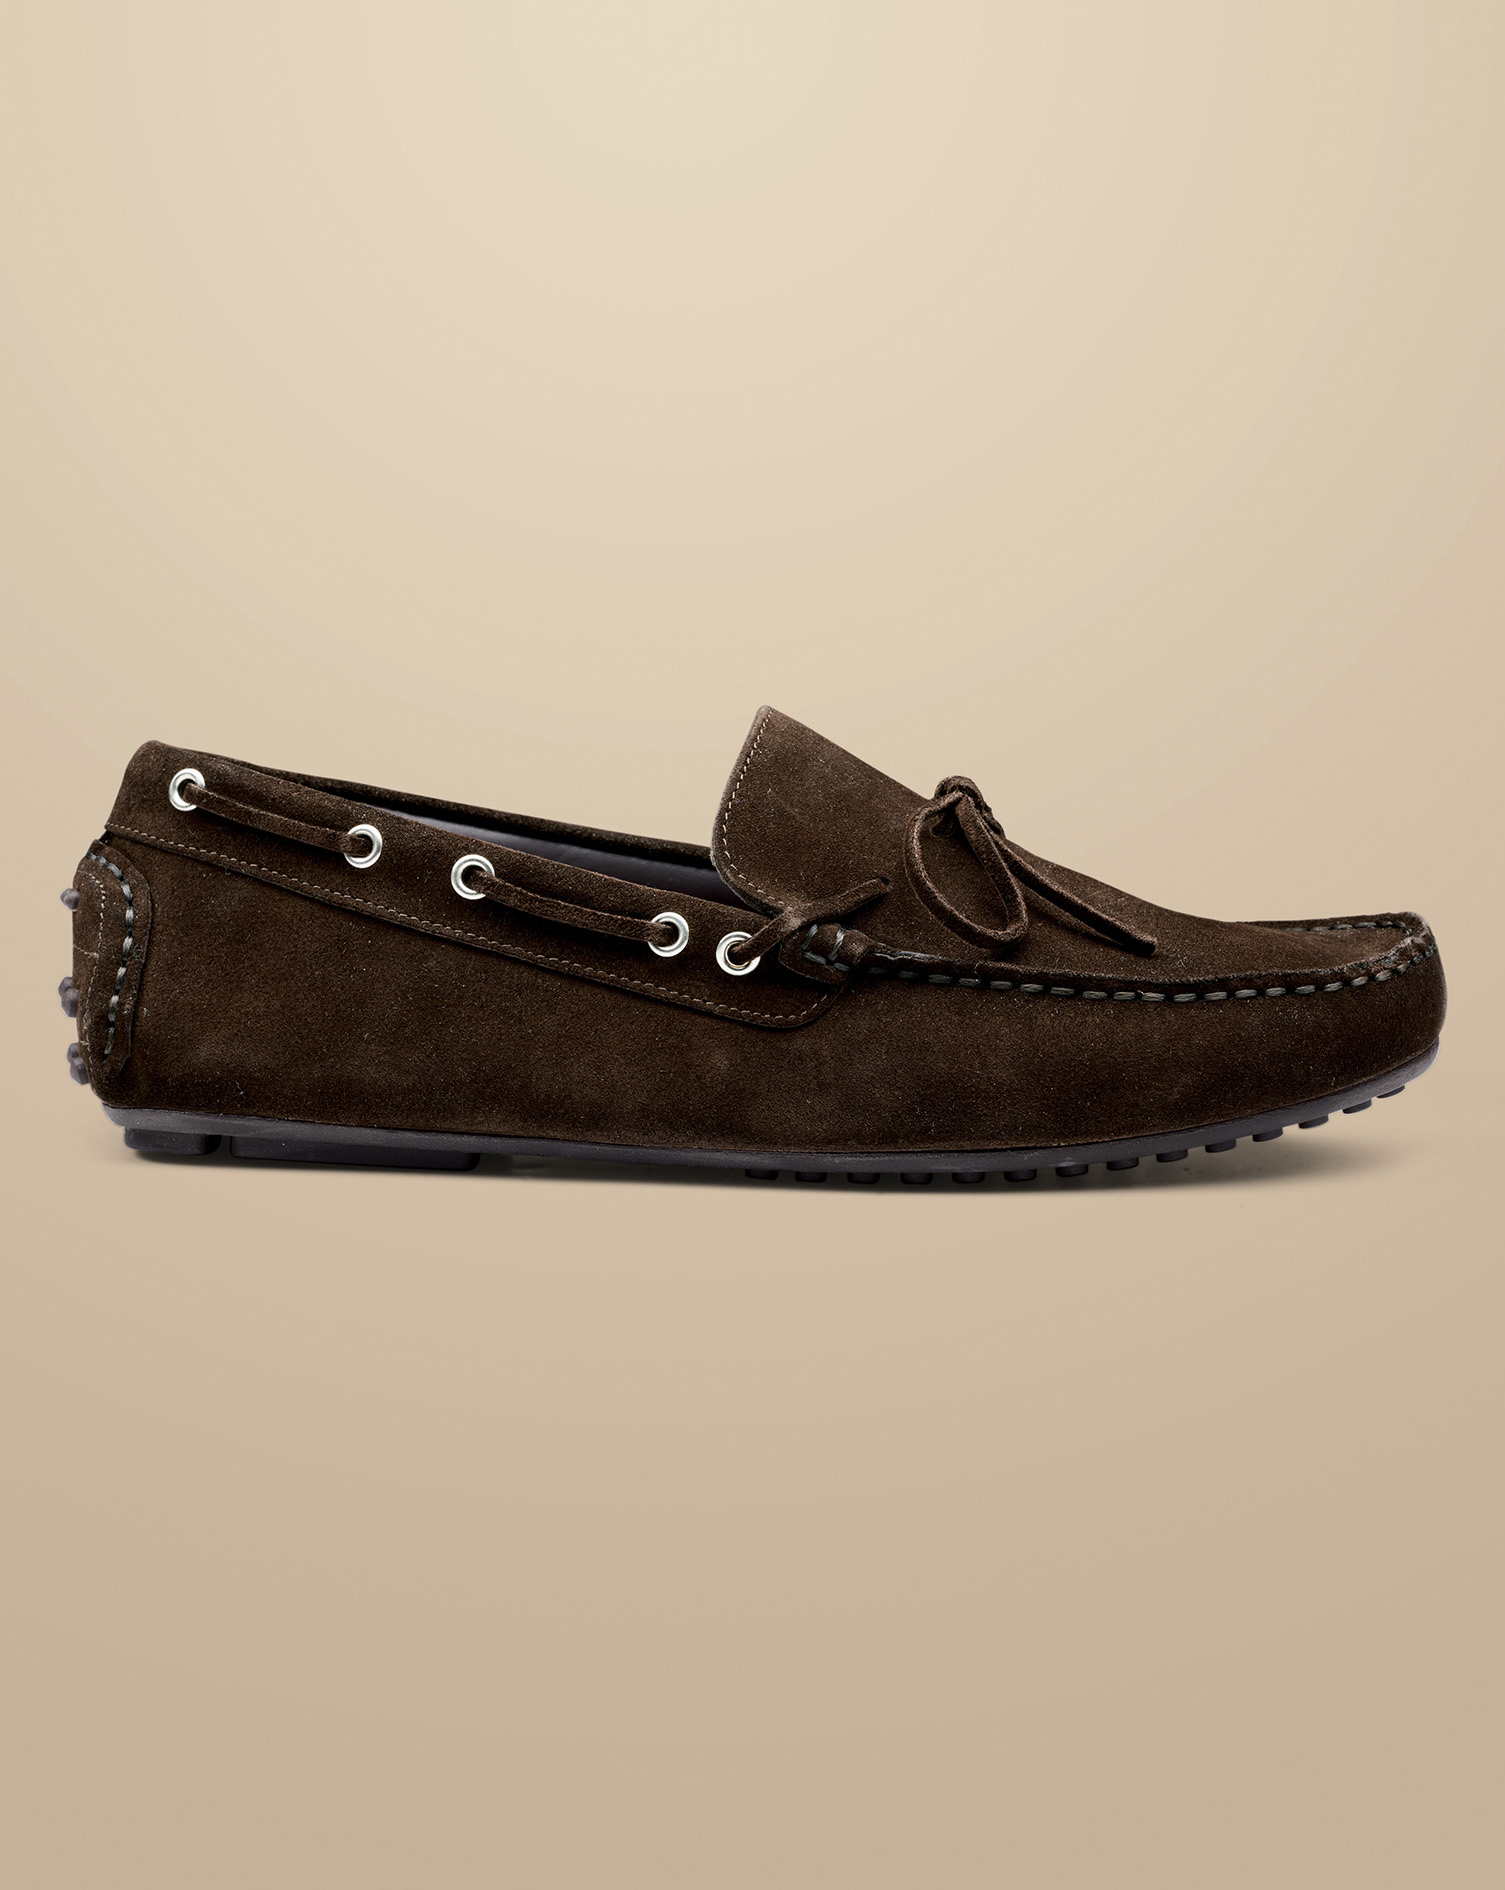 Men's Charles Tyrwhitt Driving Loafer - Dark Chocolate Brown Size 8 Suede
